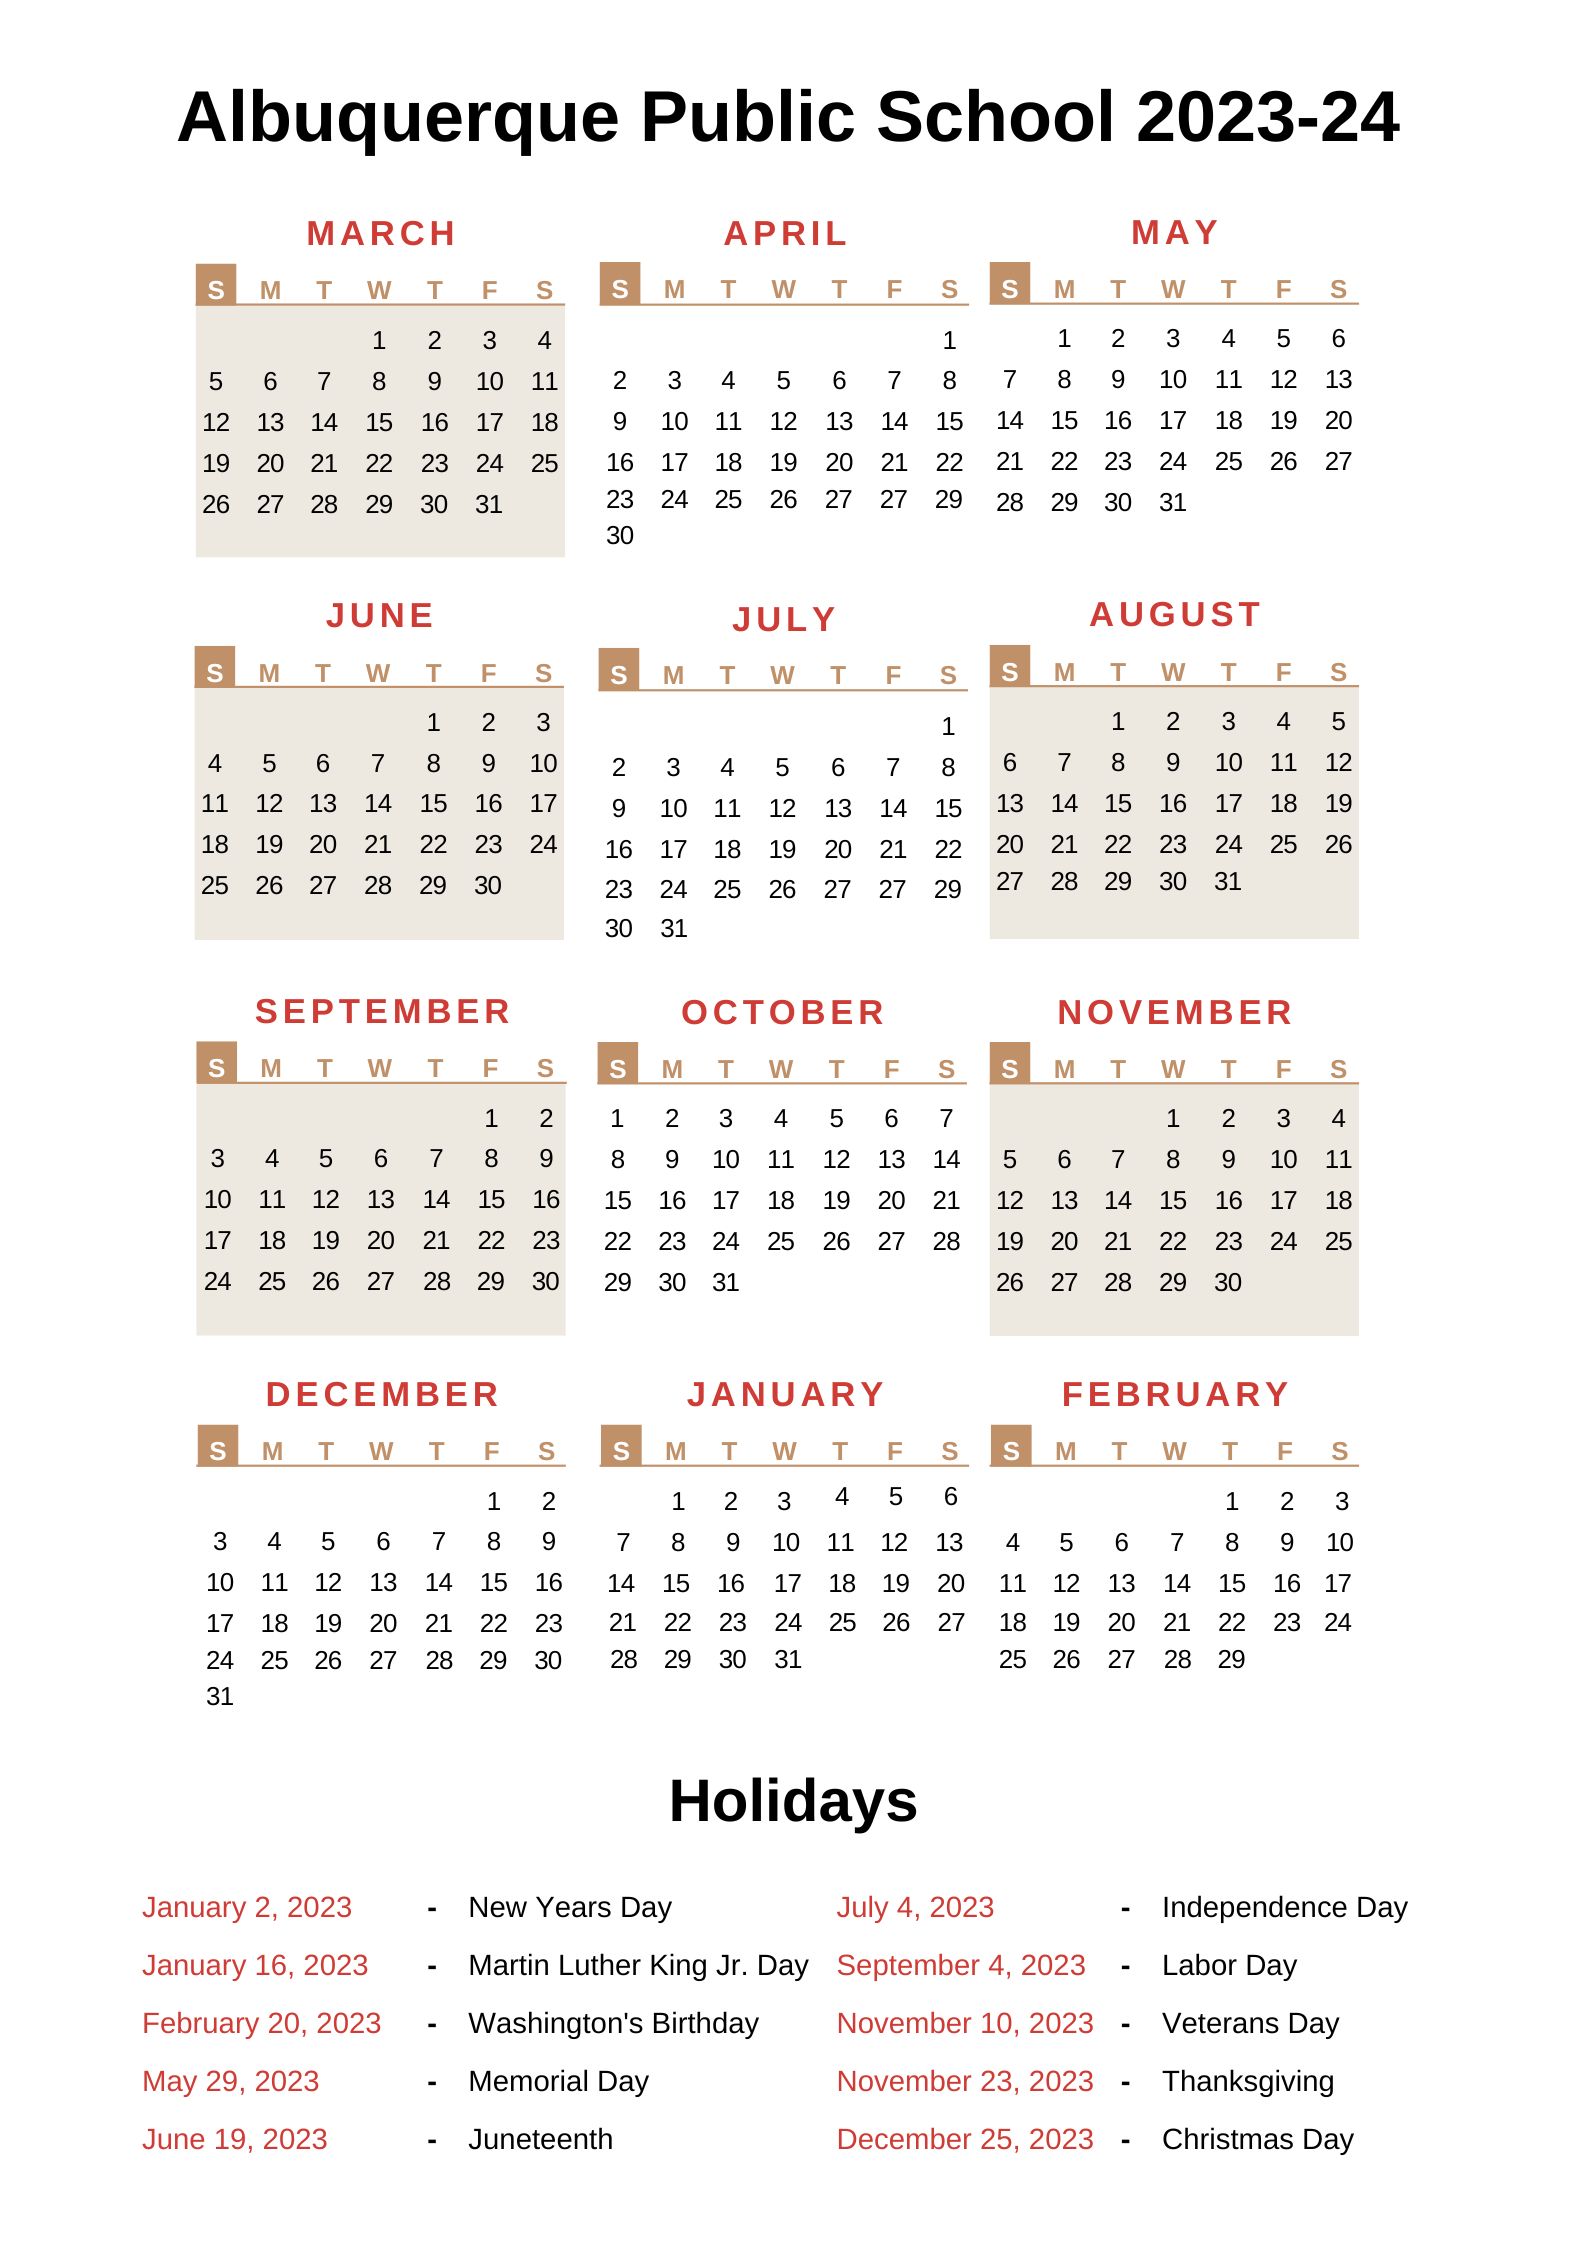 Albuquerque Public Schools Calendar APS 2023 24 with Holidays